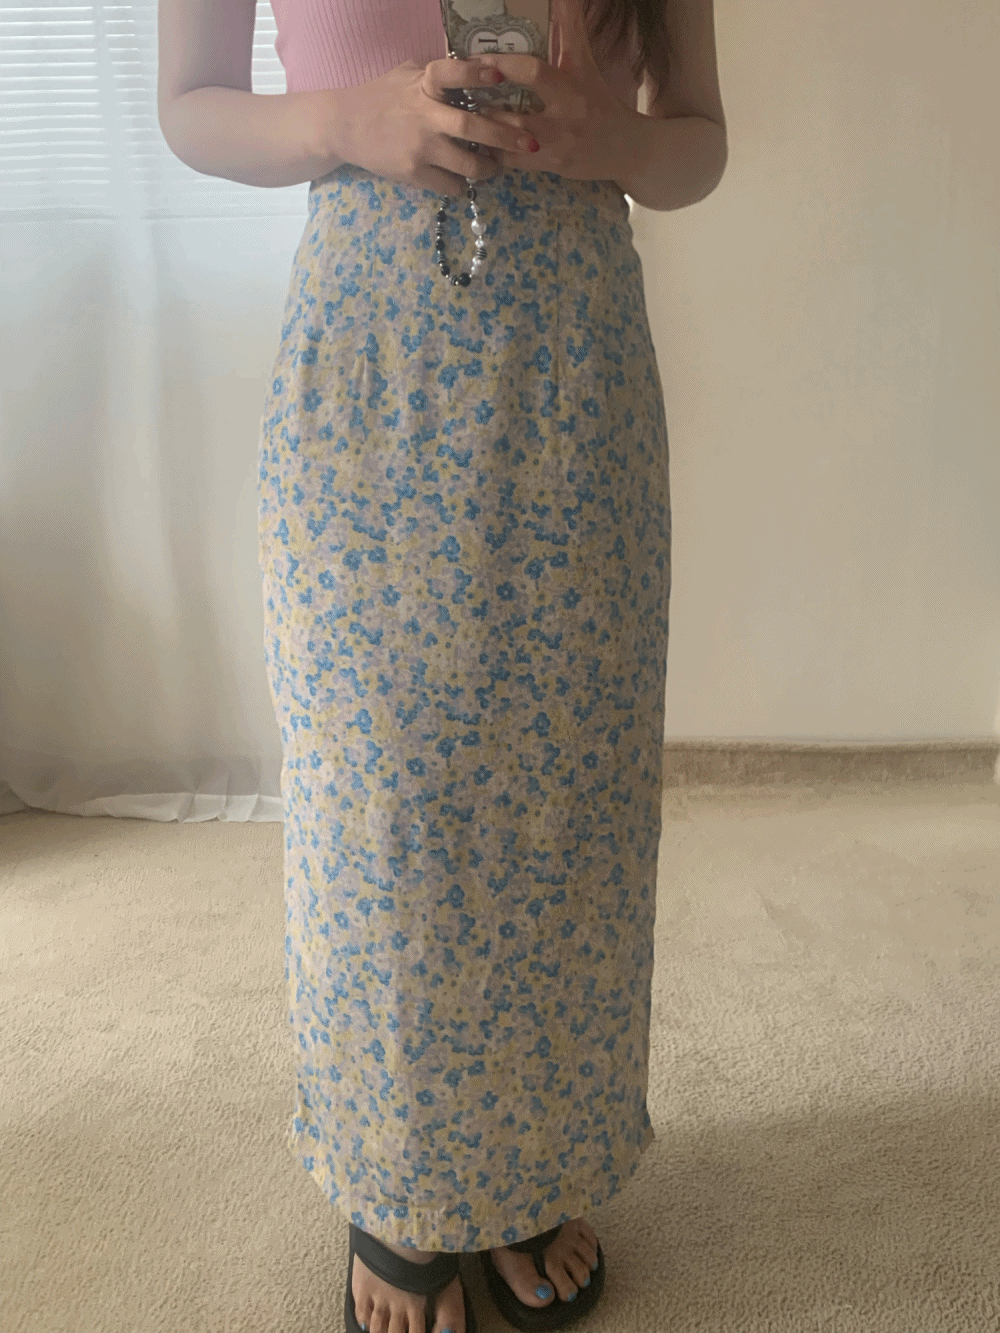 [Skirt] Chloe pastel floral skirt / 3 colors